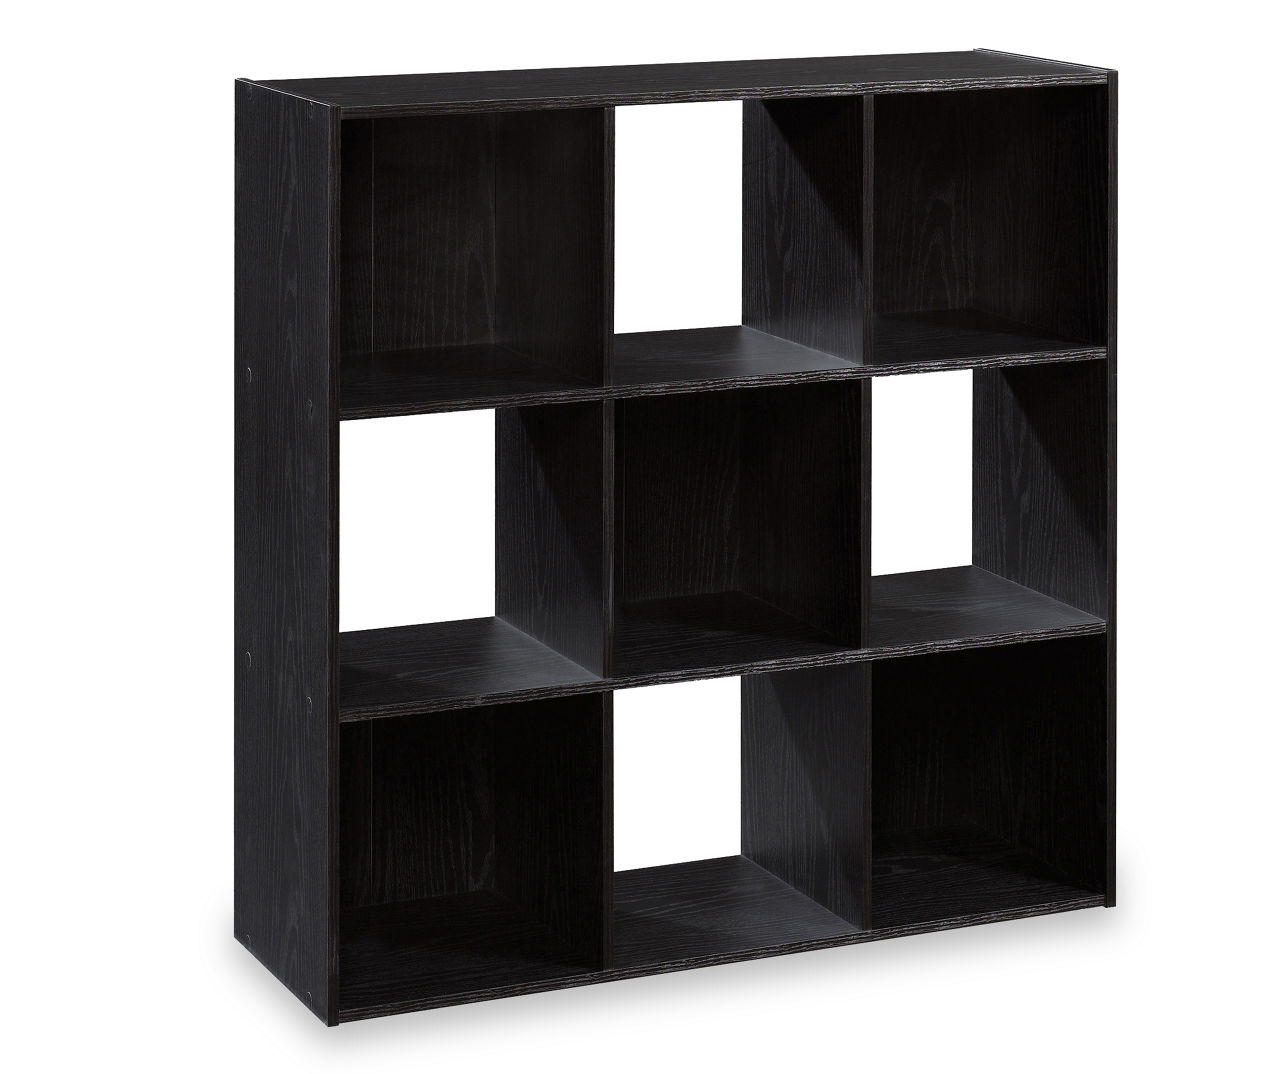 Black Small Bookshelf, Wood 8 Cube Storage Organizer Book Shelves